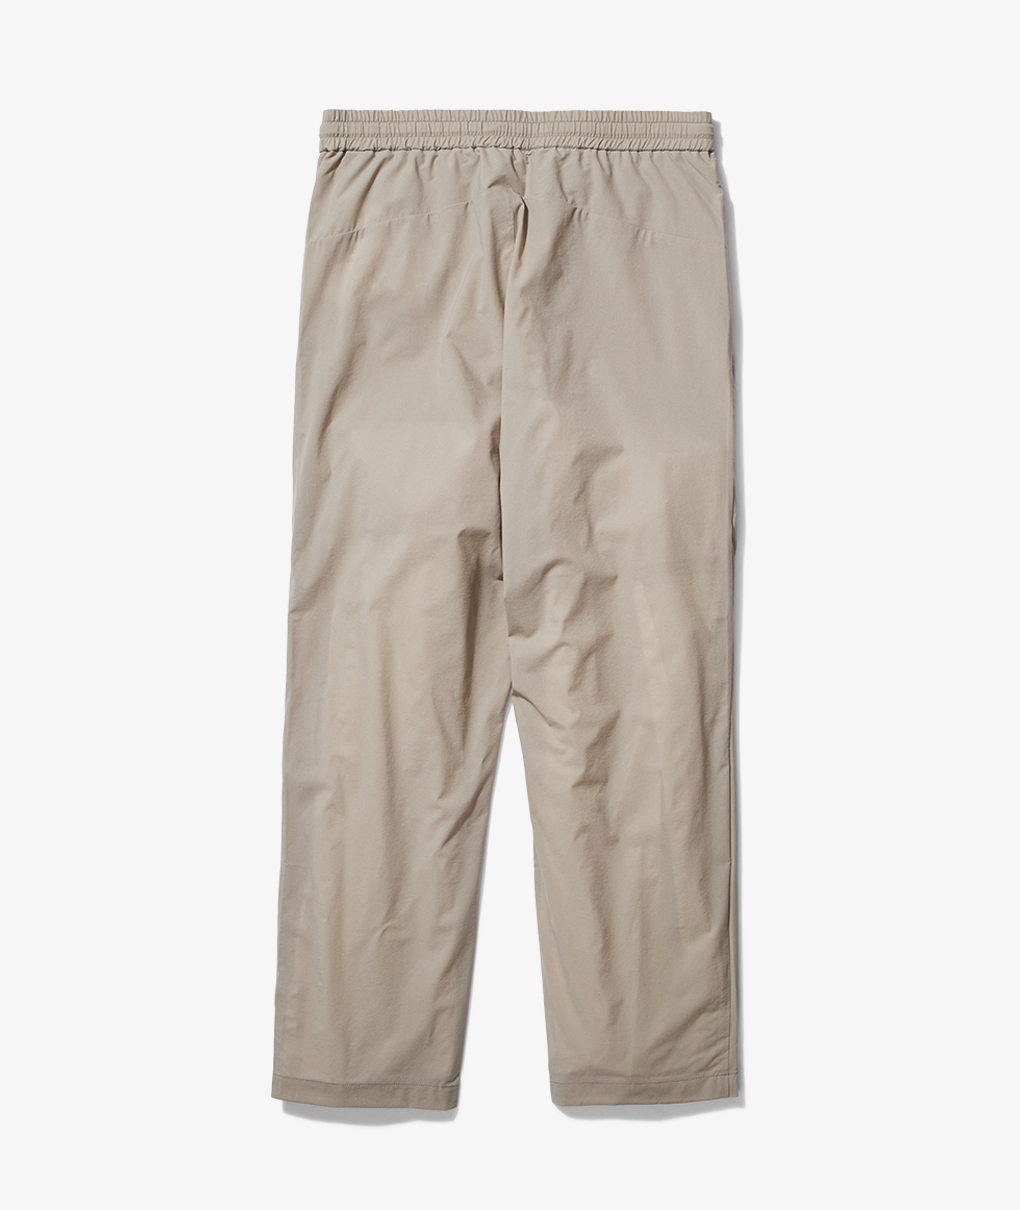 Peak Performance Navy Blue Ground Pants Trousers Size M | eBay